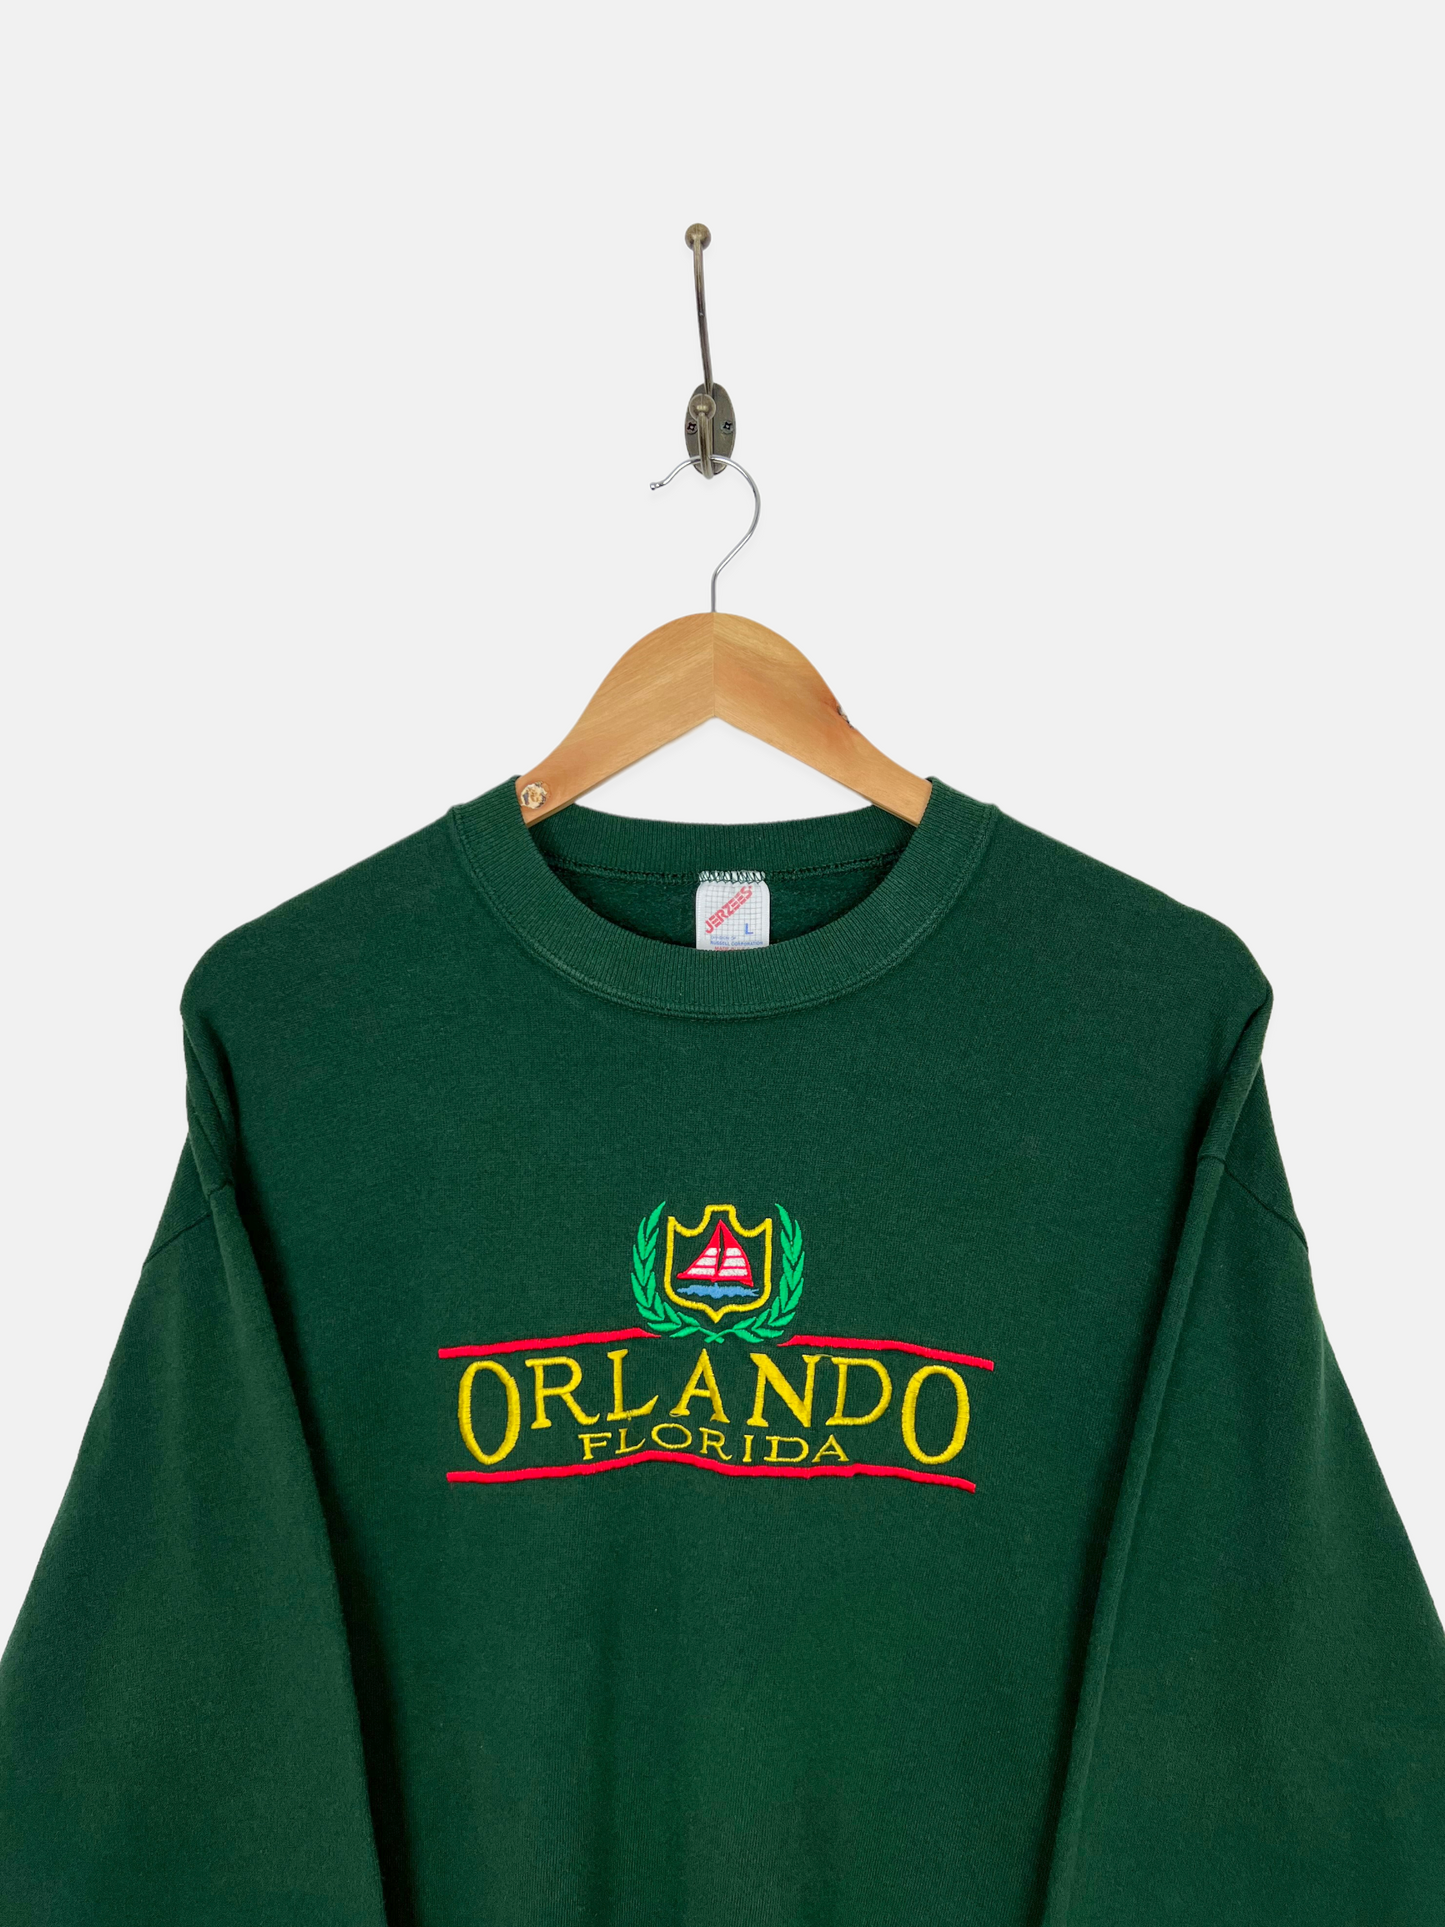 90's Orlando Florida Embroidered Vintage Sweatshirt Size 10-12